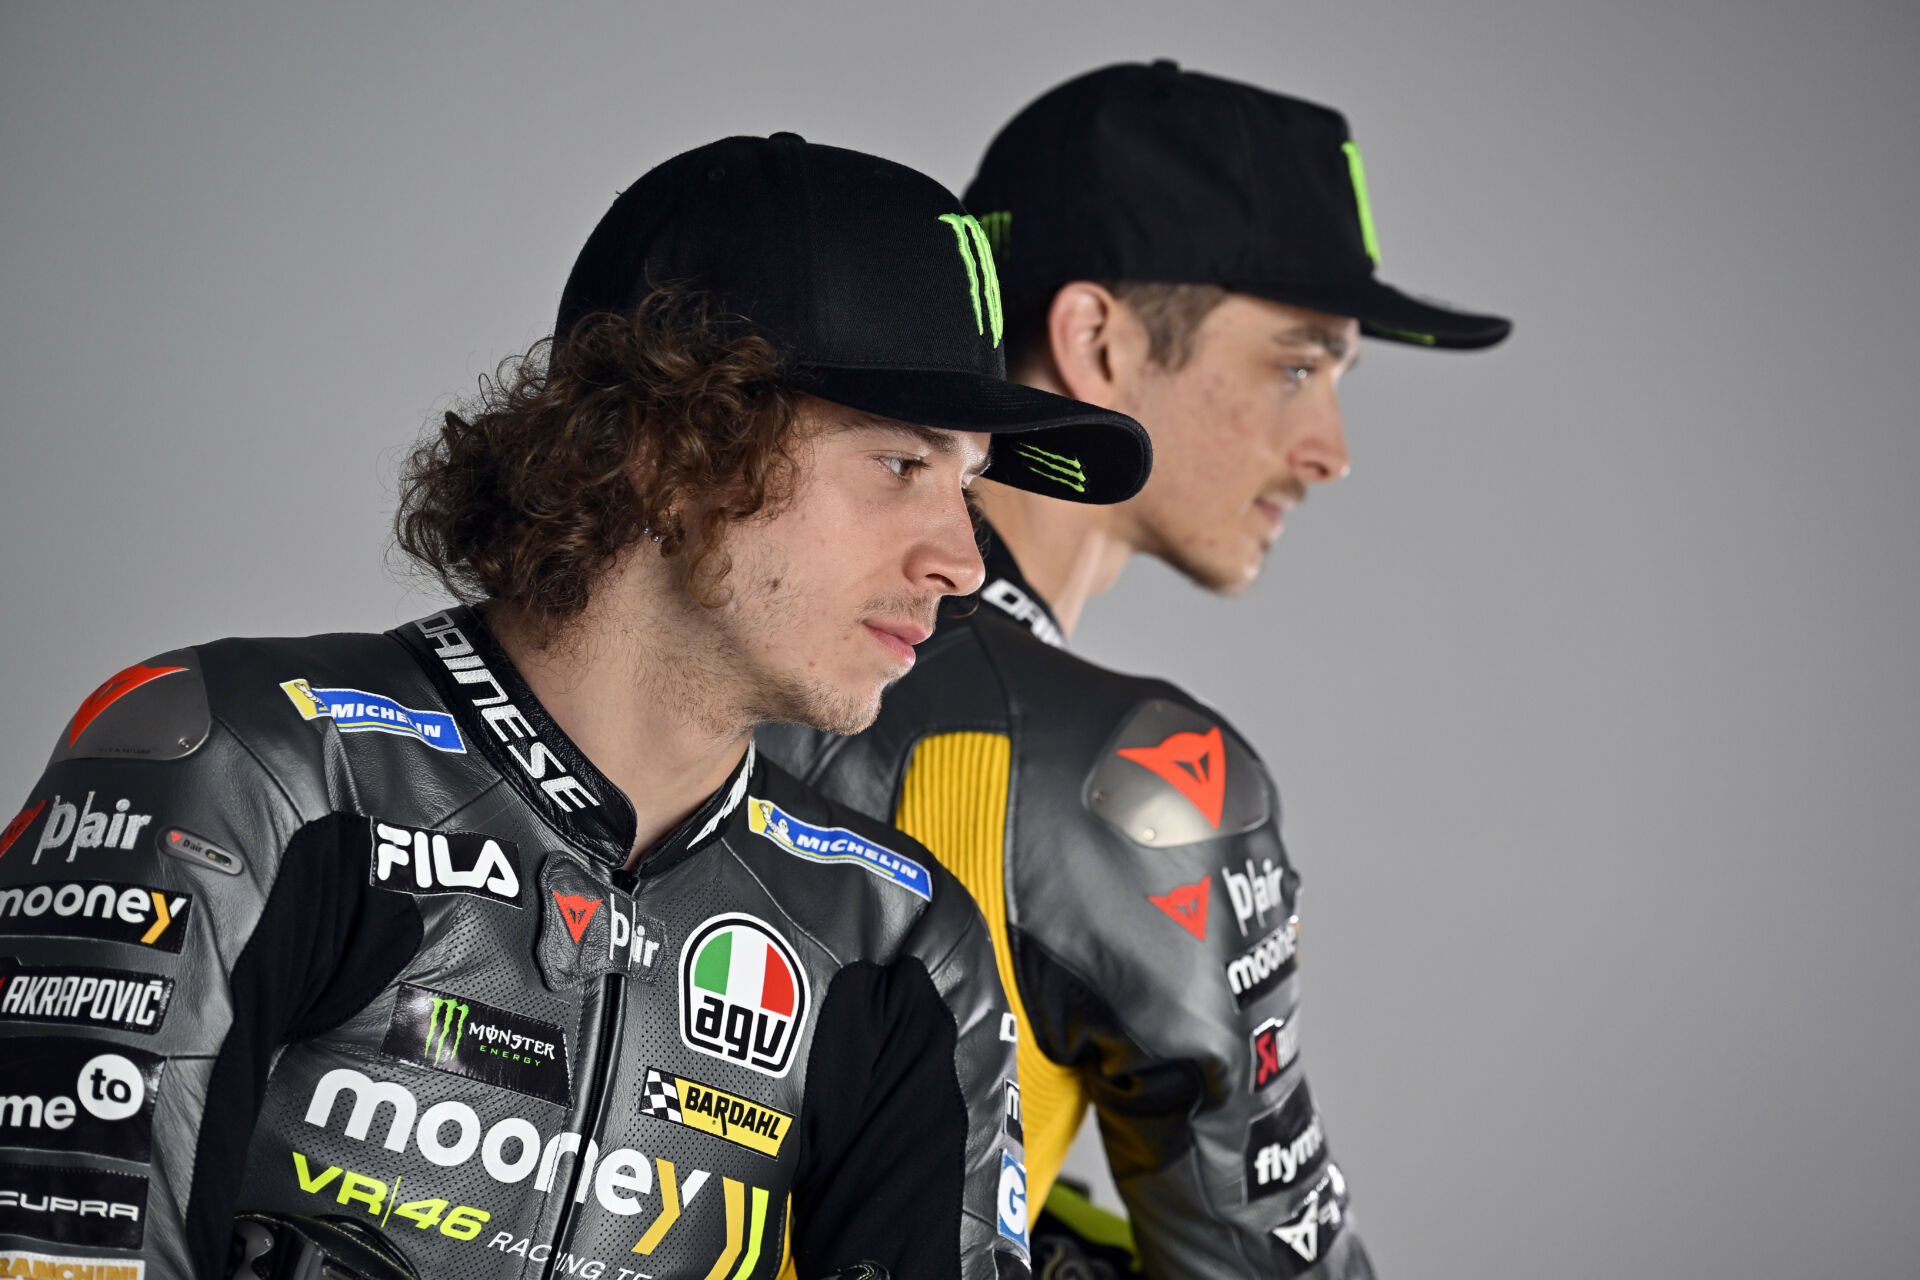 Mooney VR46 Racing Team MotoGP riders Marco Bezzecchi (left) and Luca Marini (right). Photo courtesy Mooney VR46 Racing Team.